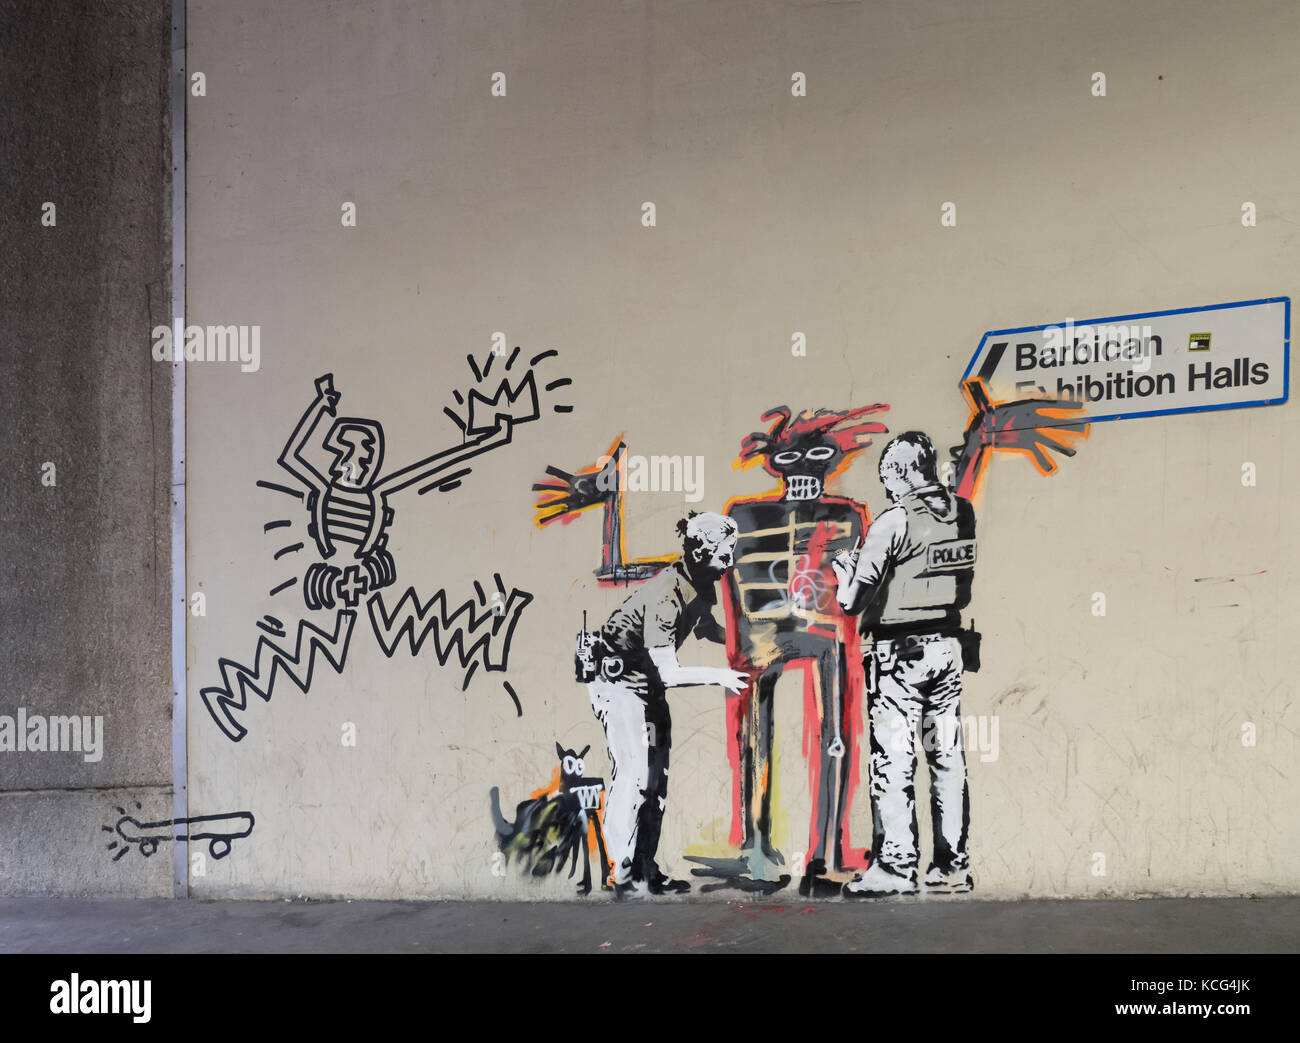 Banksy street art in the Barbican London UK inspired bu Jean-Michel Basquiat exhibition Stock Photo